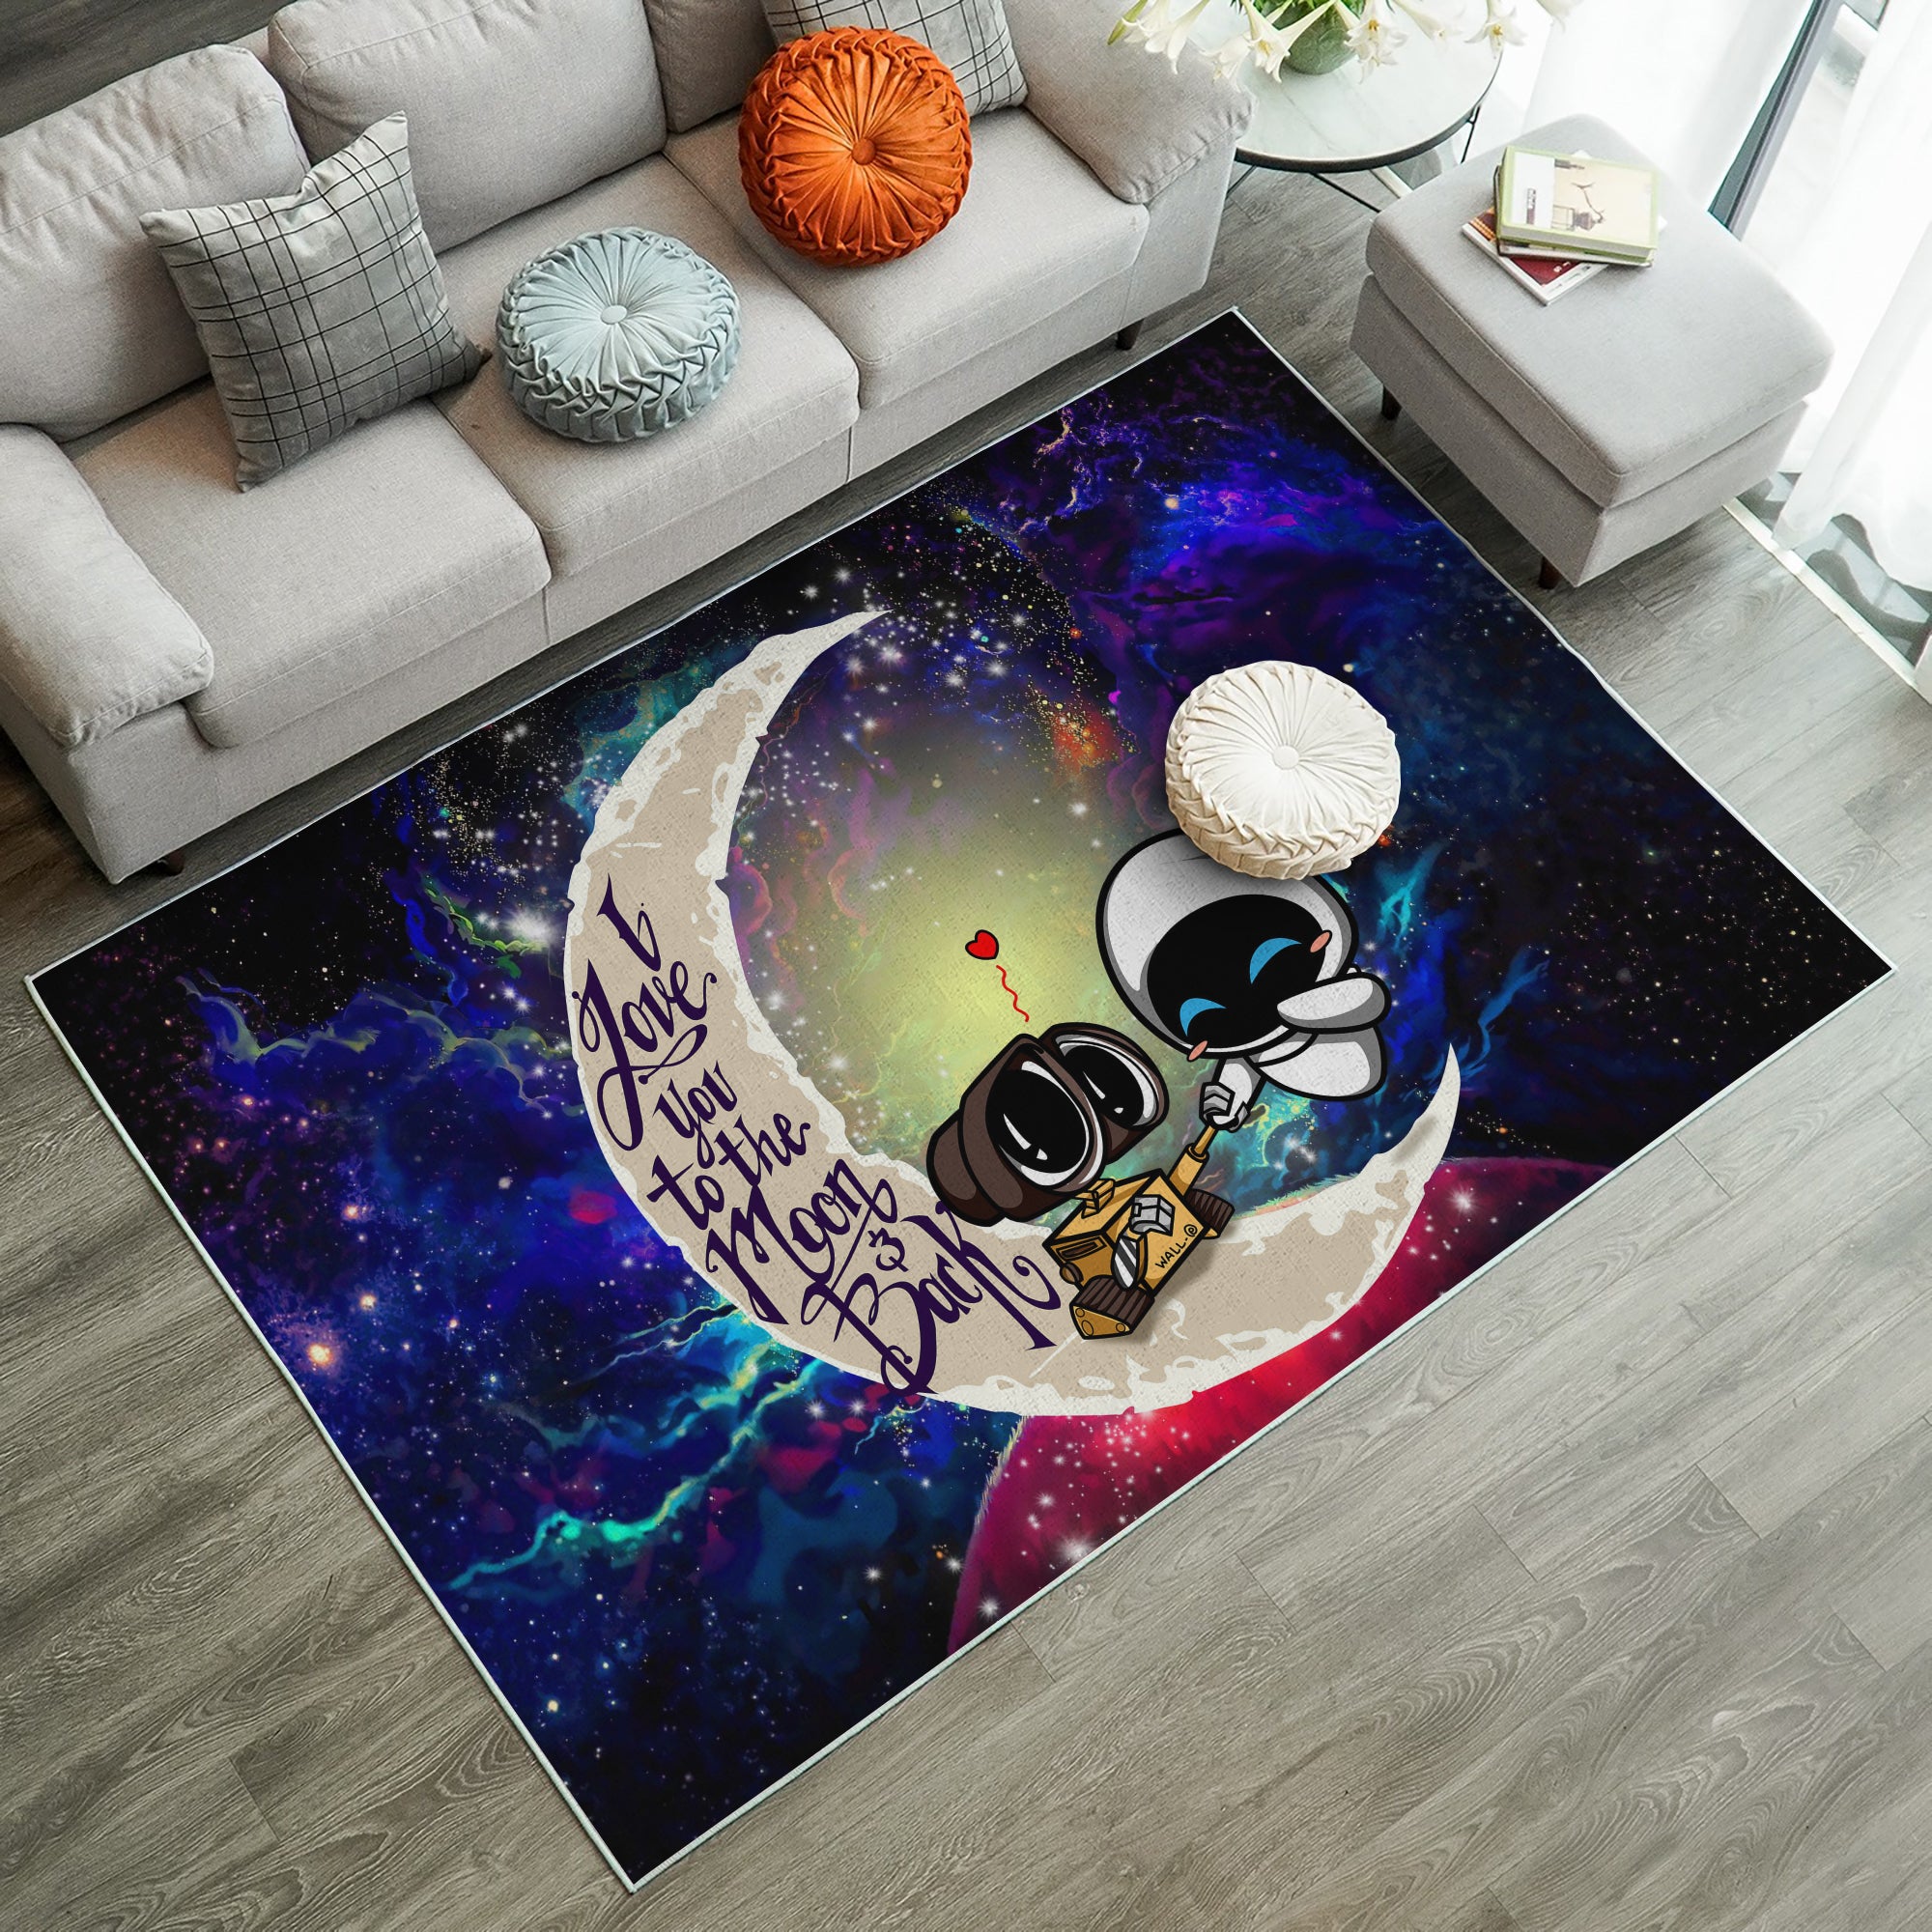 Wall-E Couple Love You To The Moon Galaxy Carpet Rug Home Room Decor